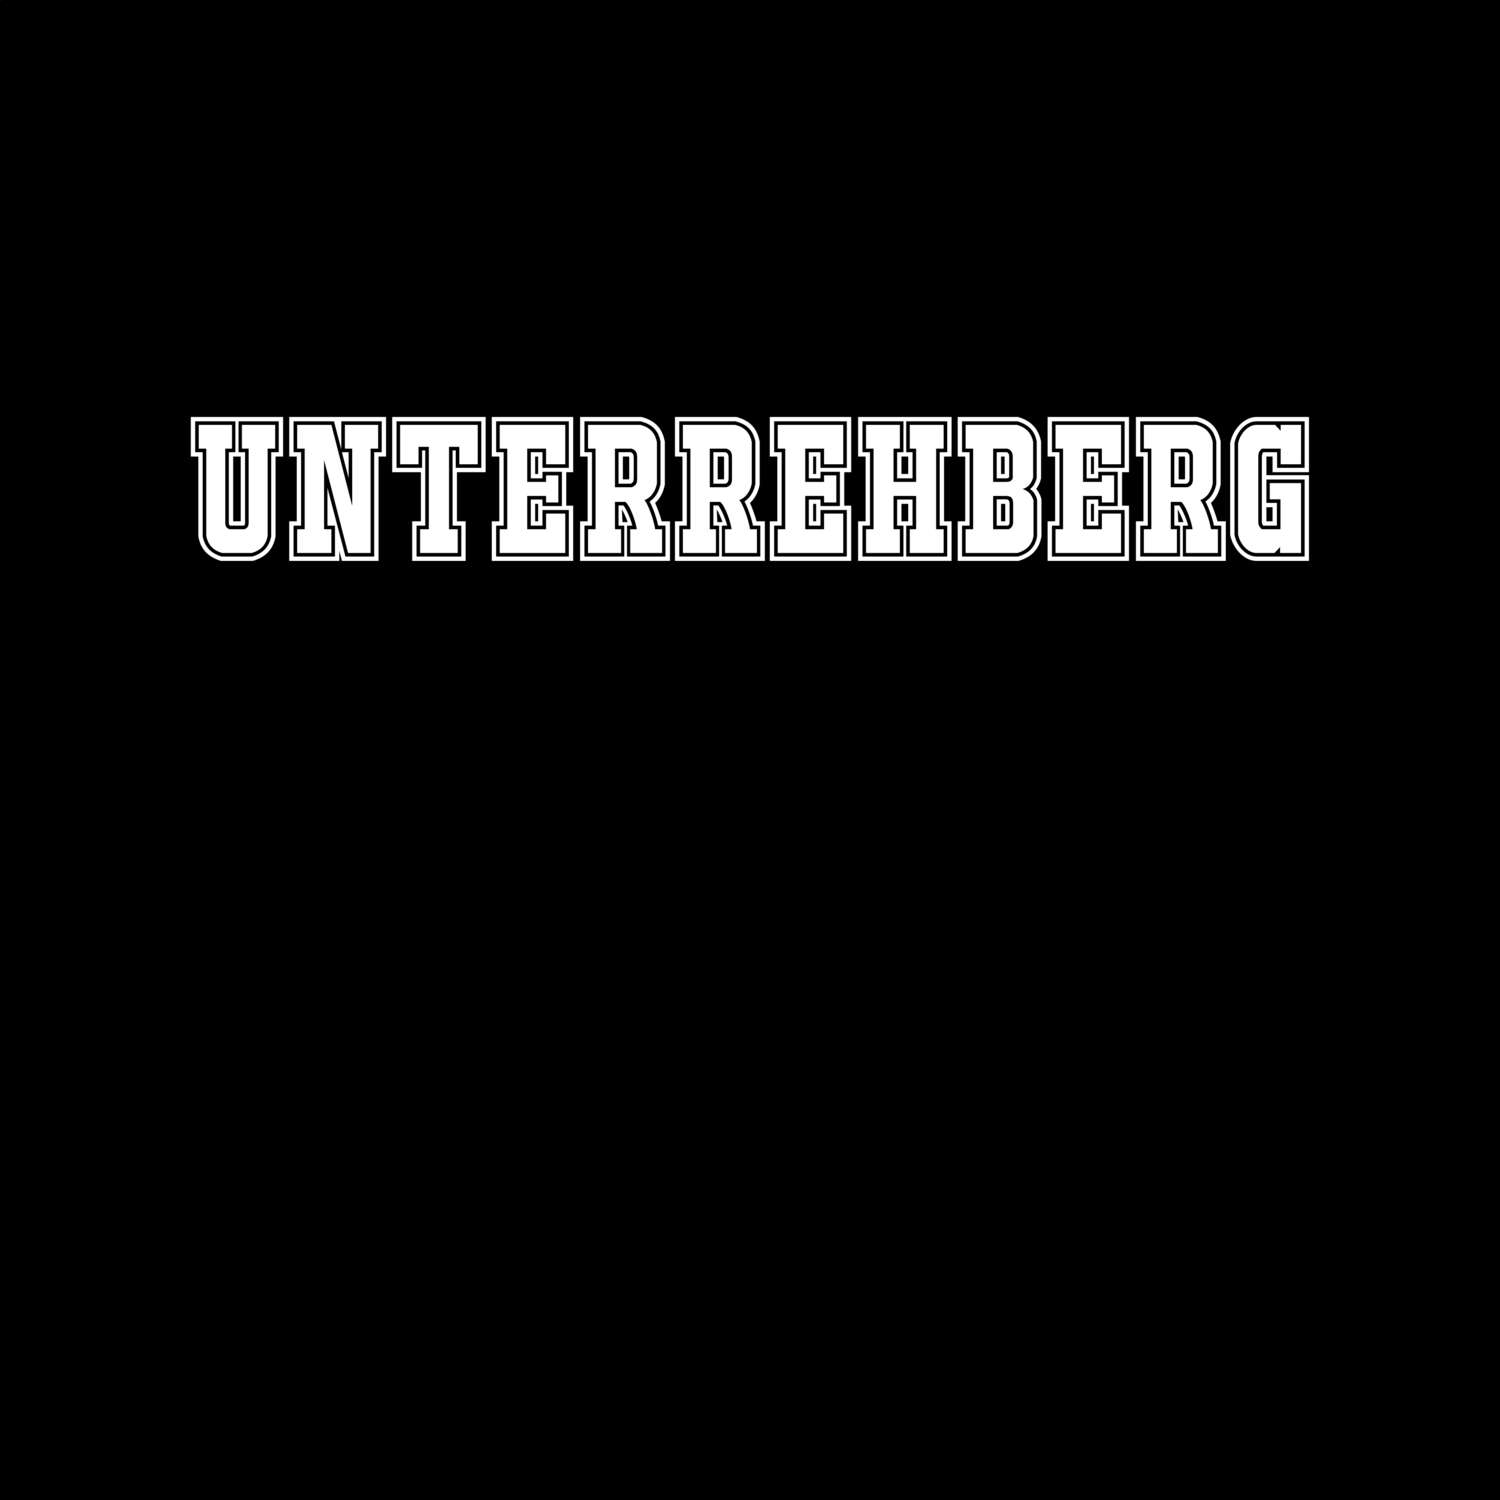 Unterrehberg T-Shirt »Classic«